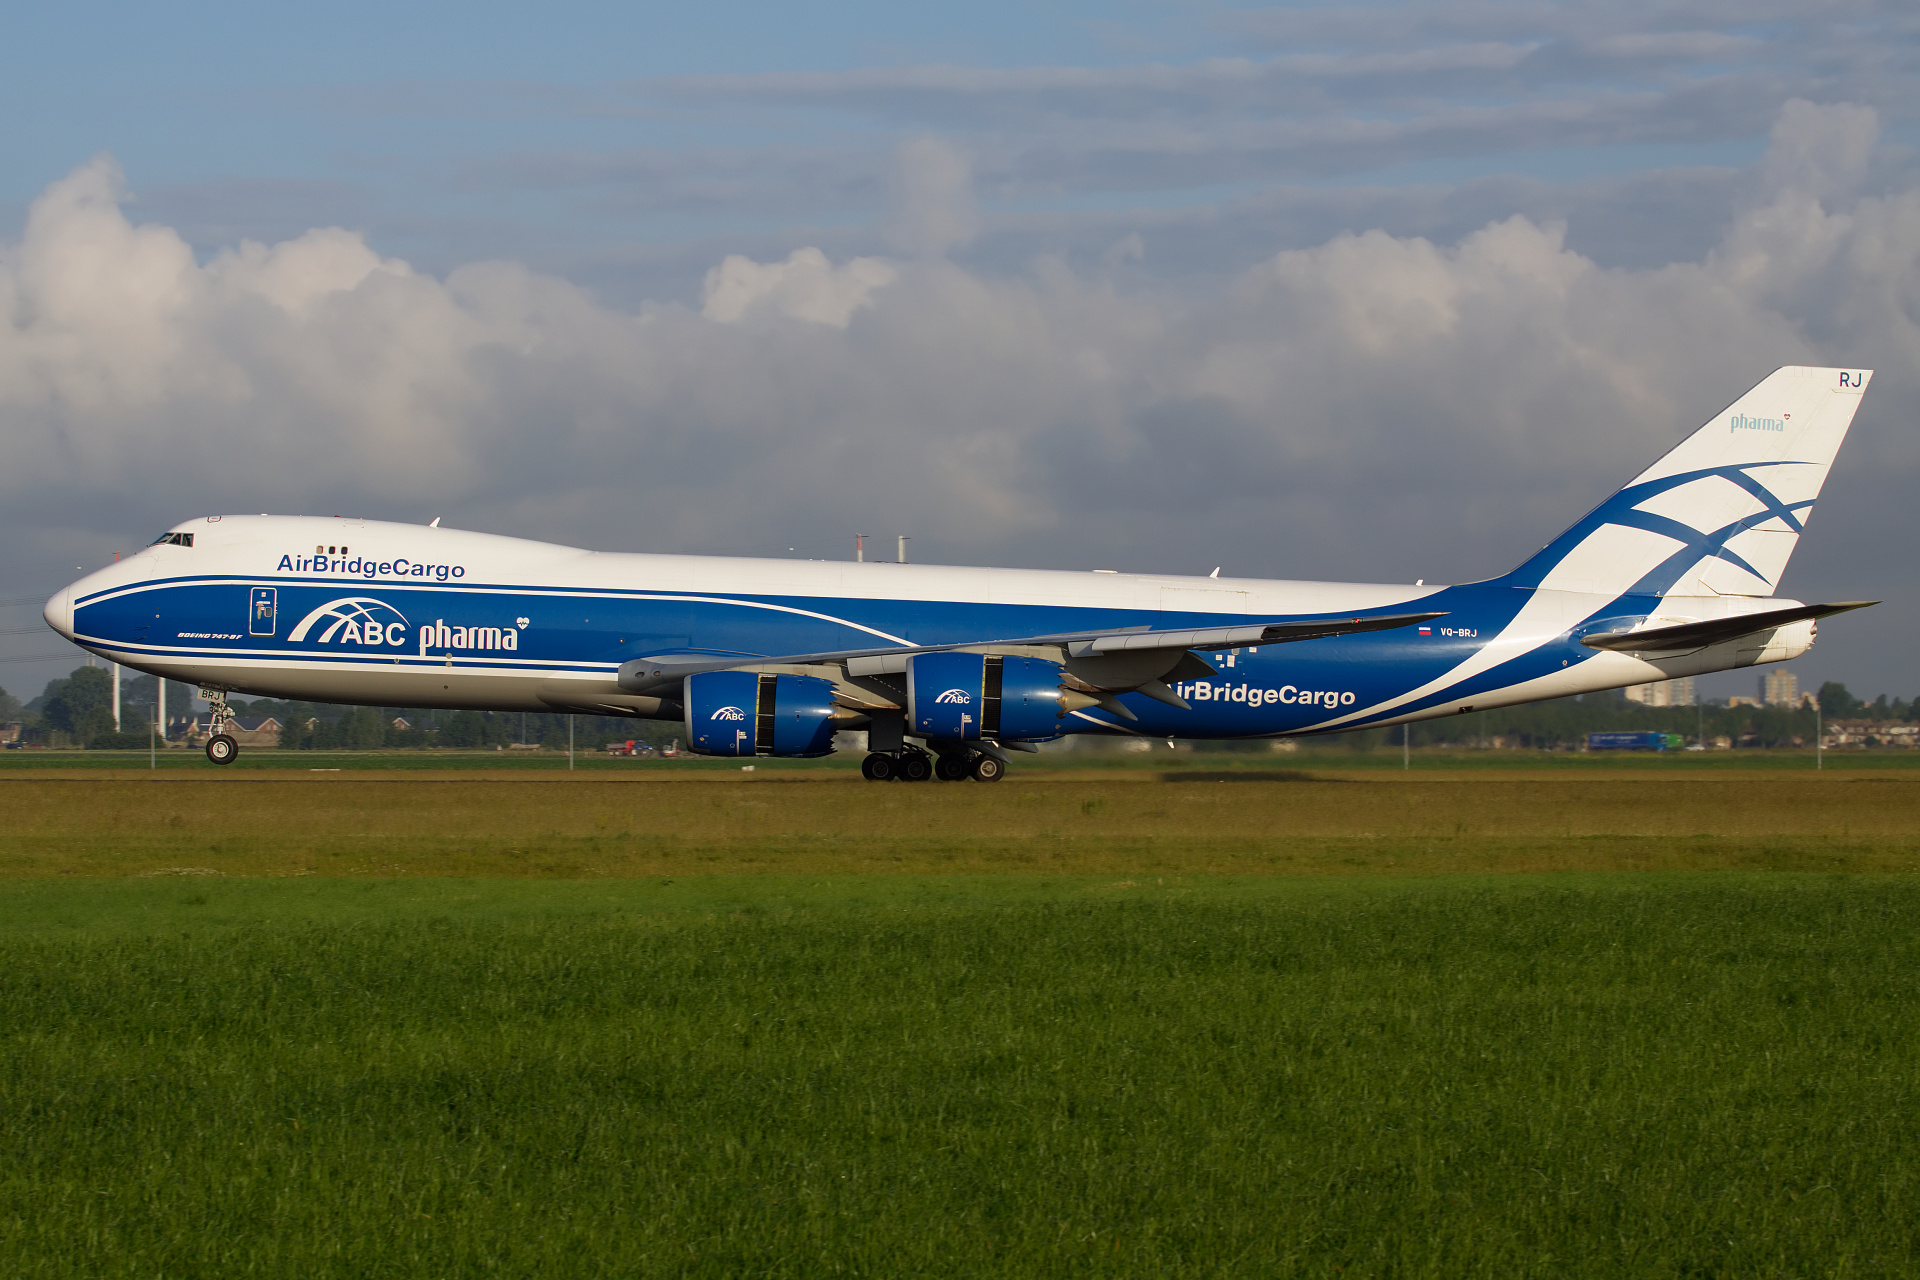 VQ-BRJ (malowanie ABC Pharma) (Samoloty » Spotting na Schiphol » Boeing 747-8F » AirBridgeCargo Airlines)